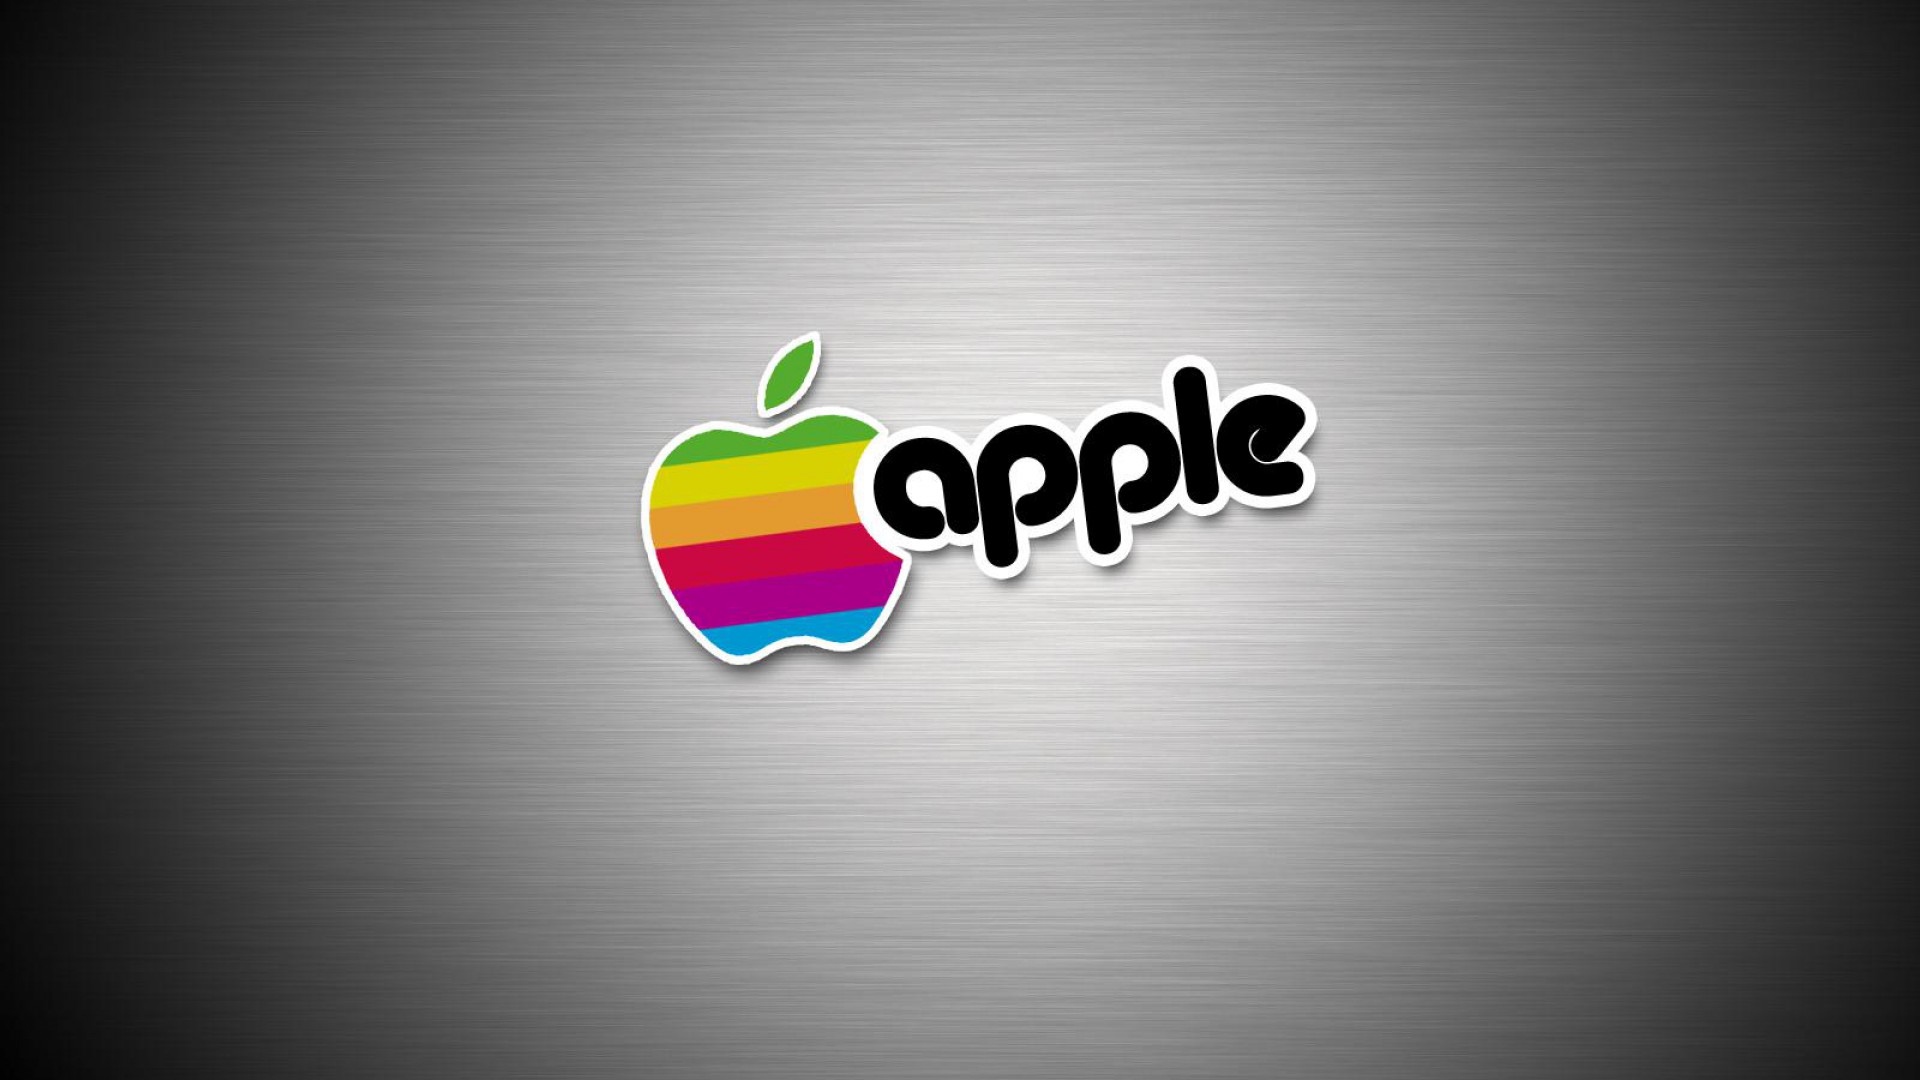 Apple Logo Wallpapers HD A8